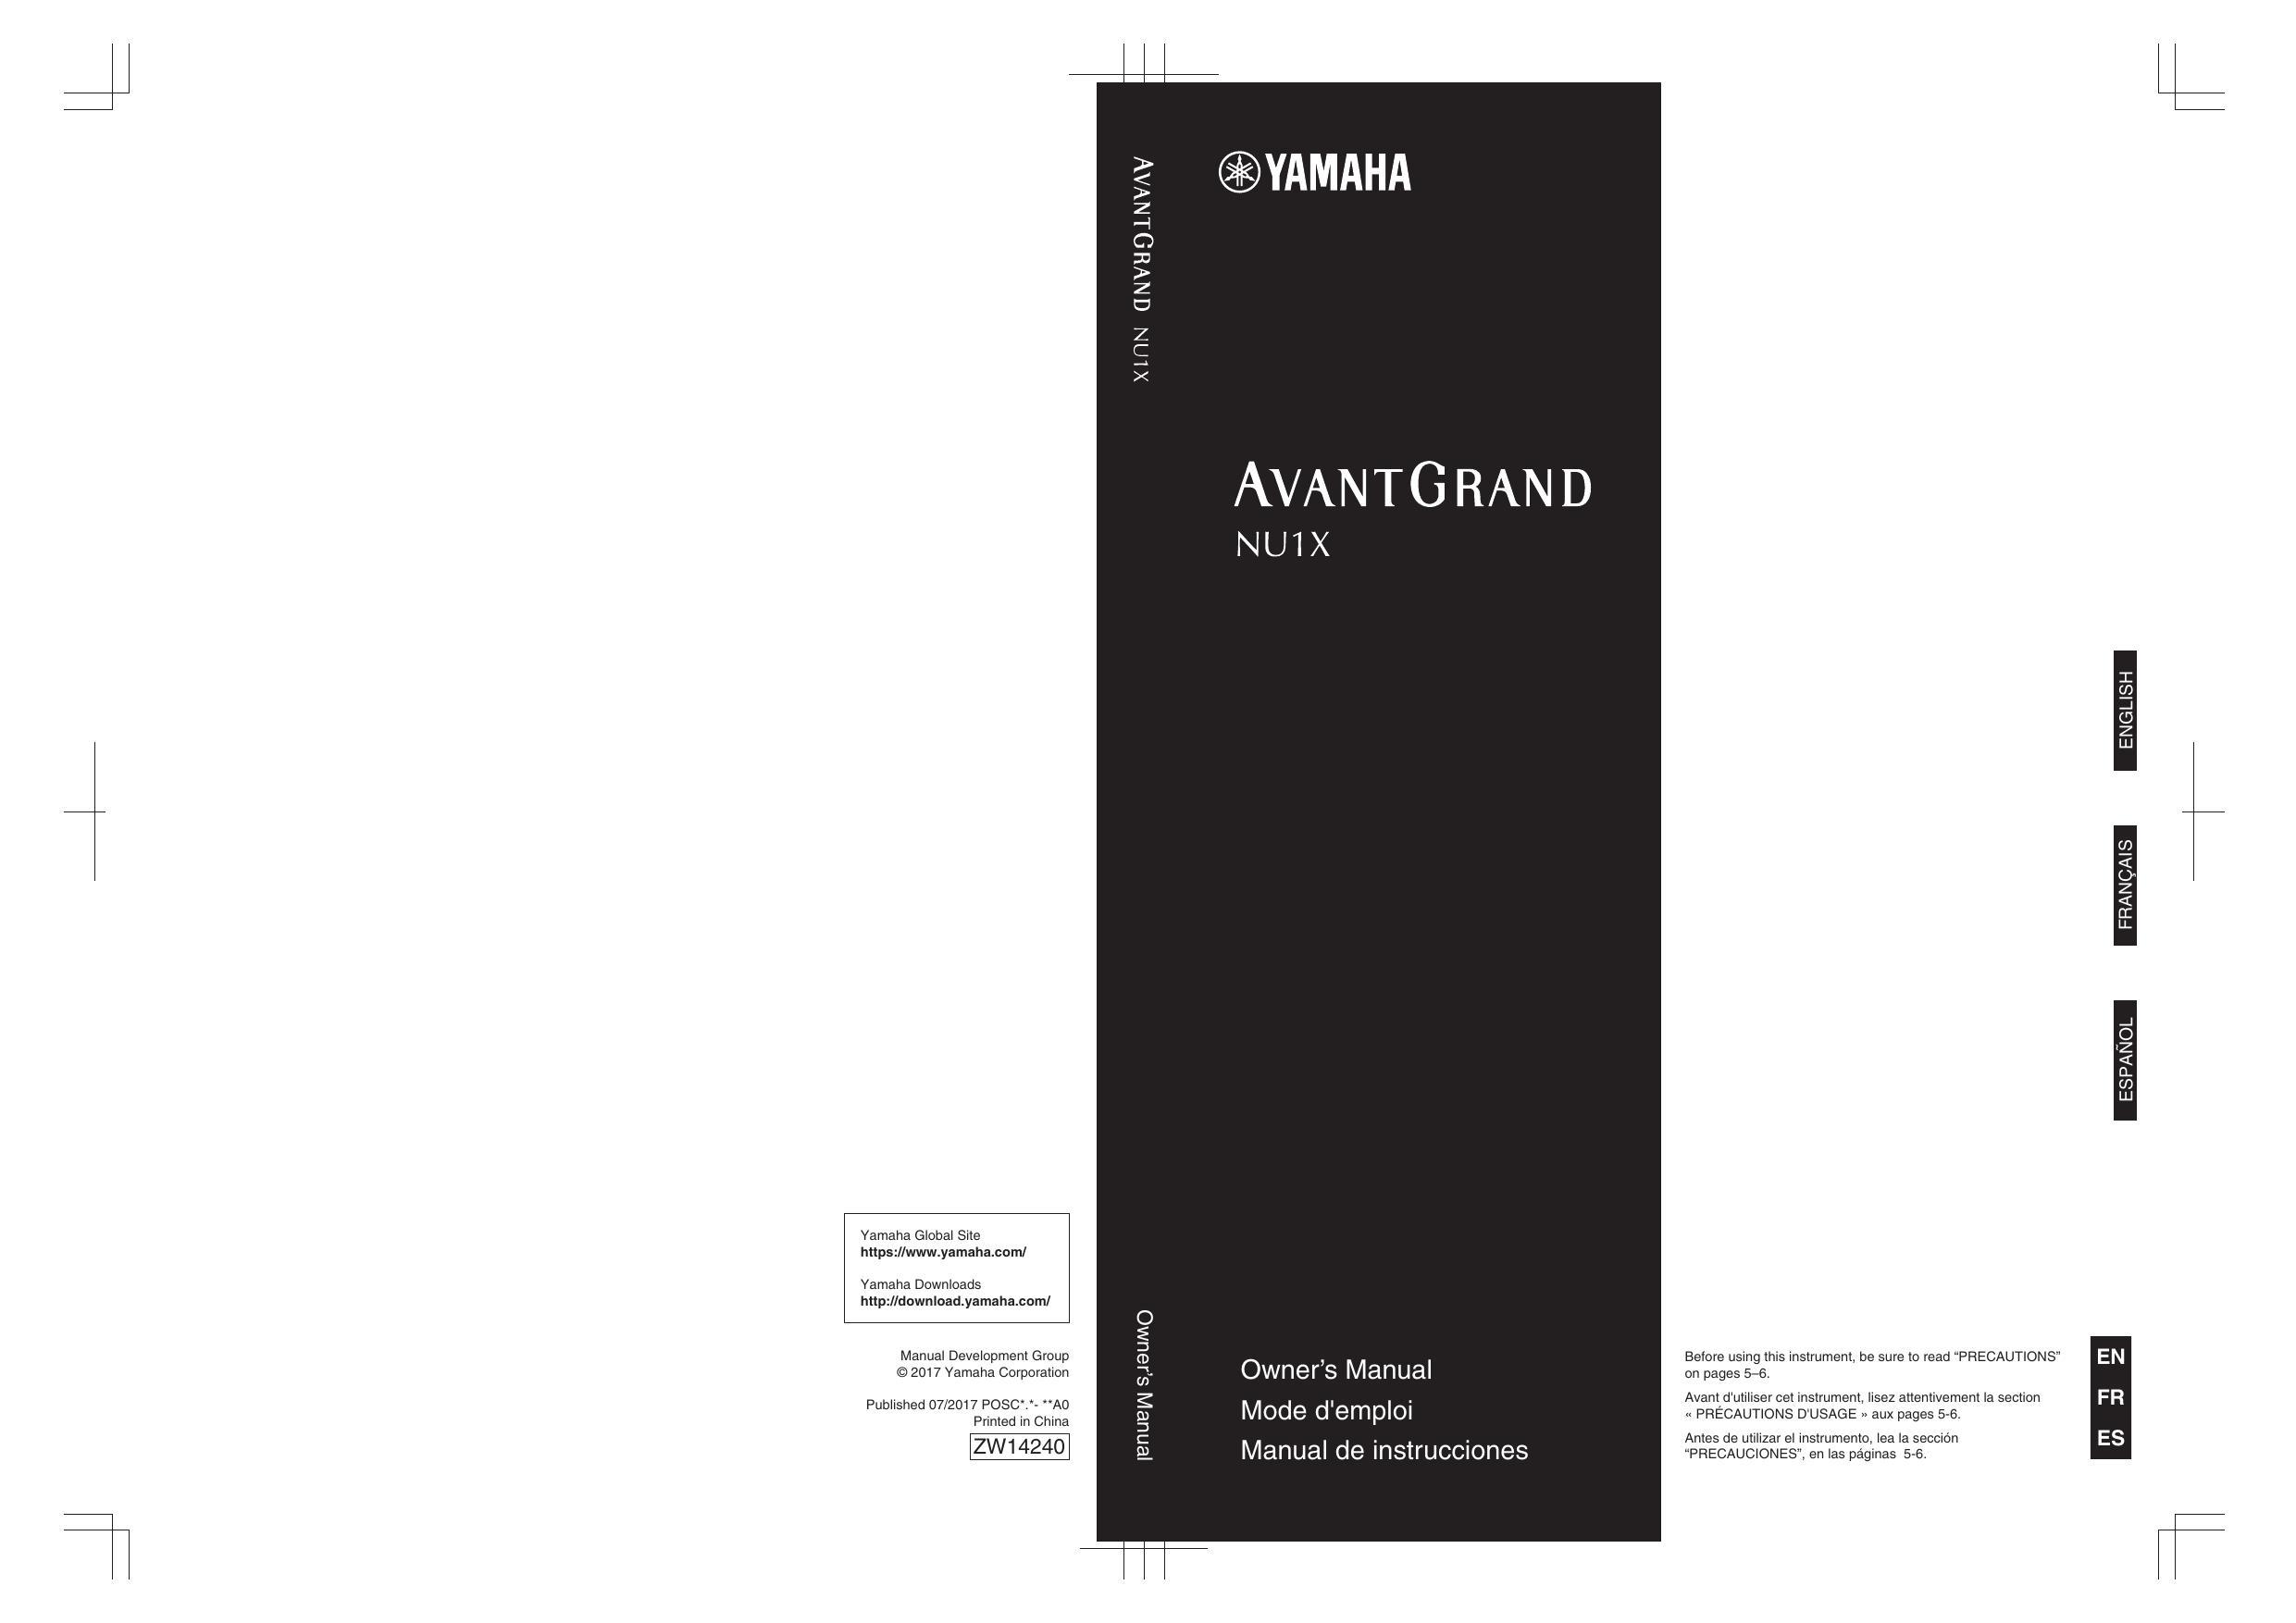 yamaha-avantgrand-nuix-owners-manual.pdf